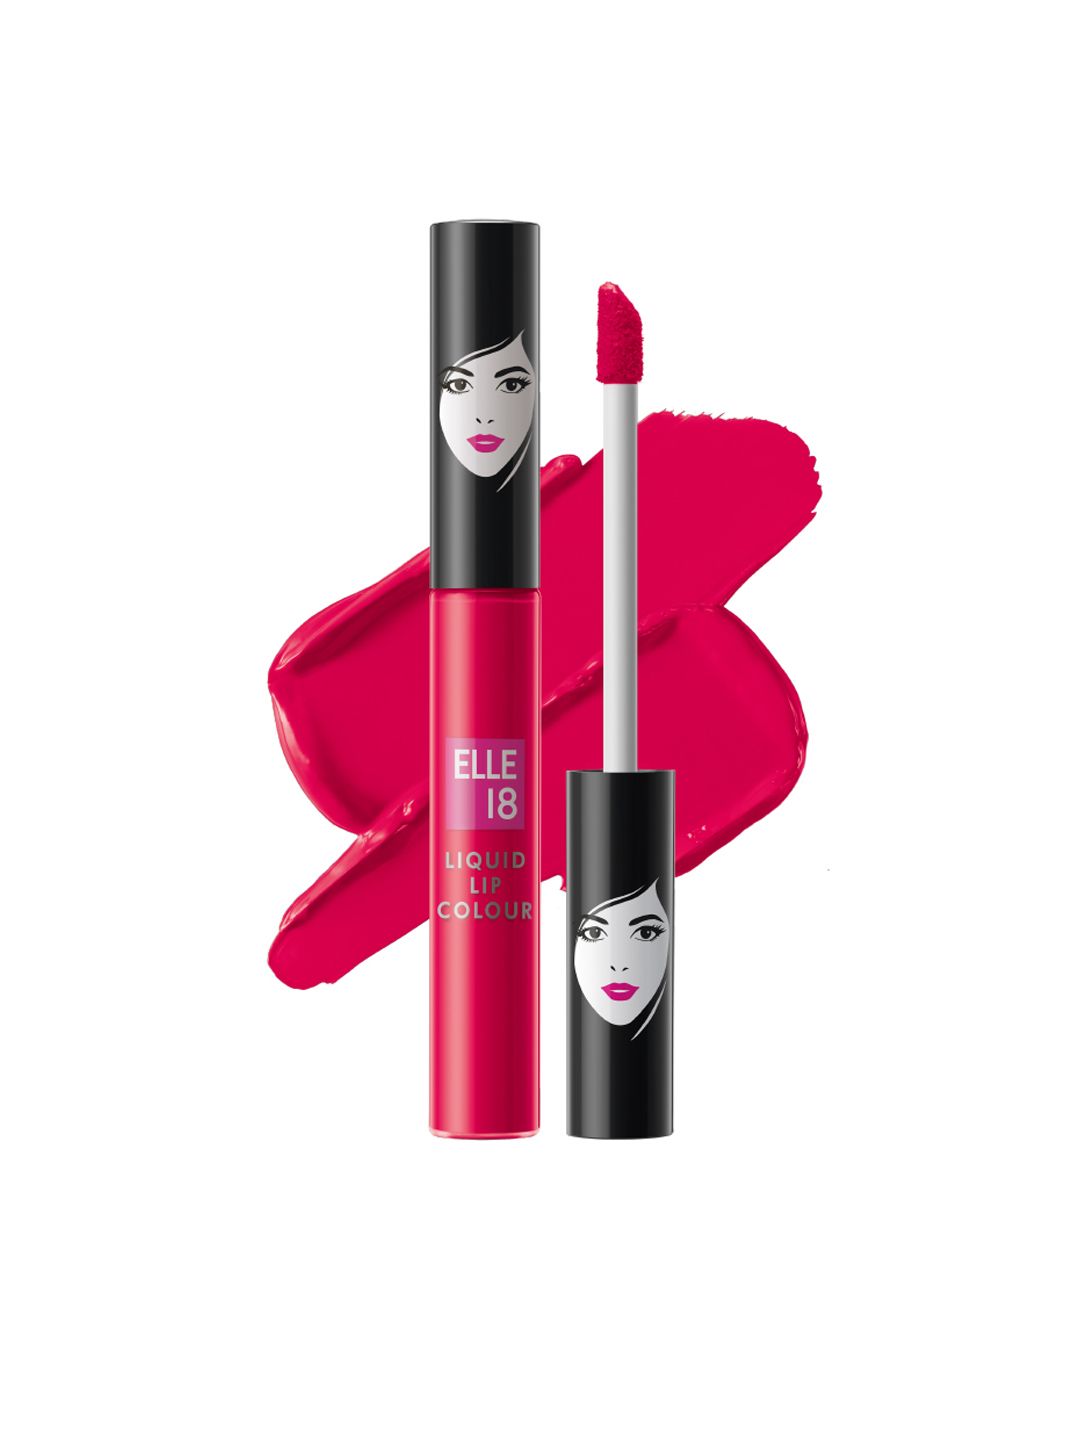 ELLE 18 Liquid Lip Color - Pink Blossom Price in India